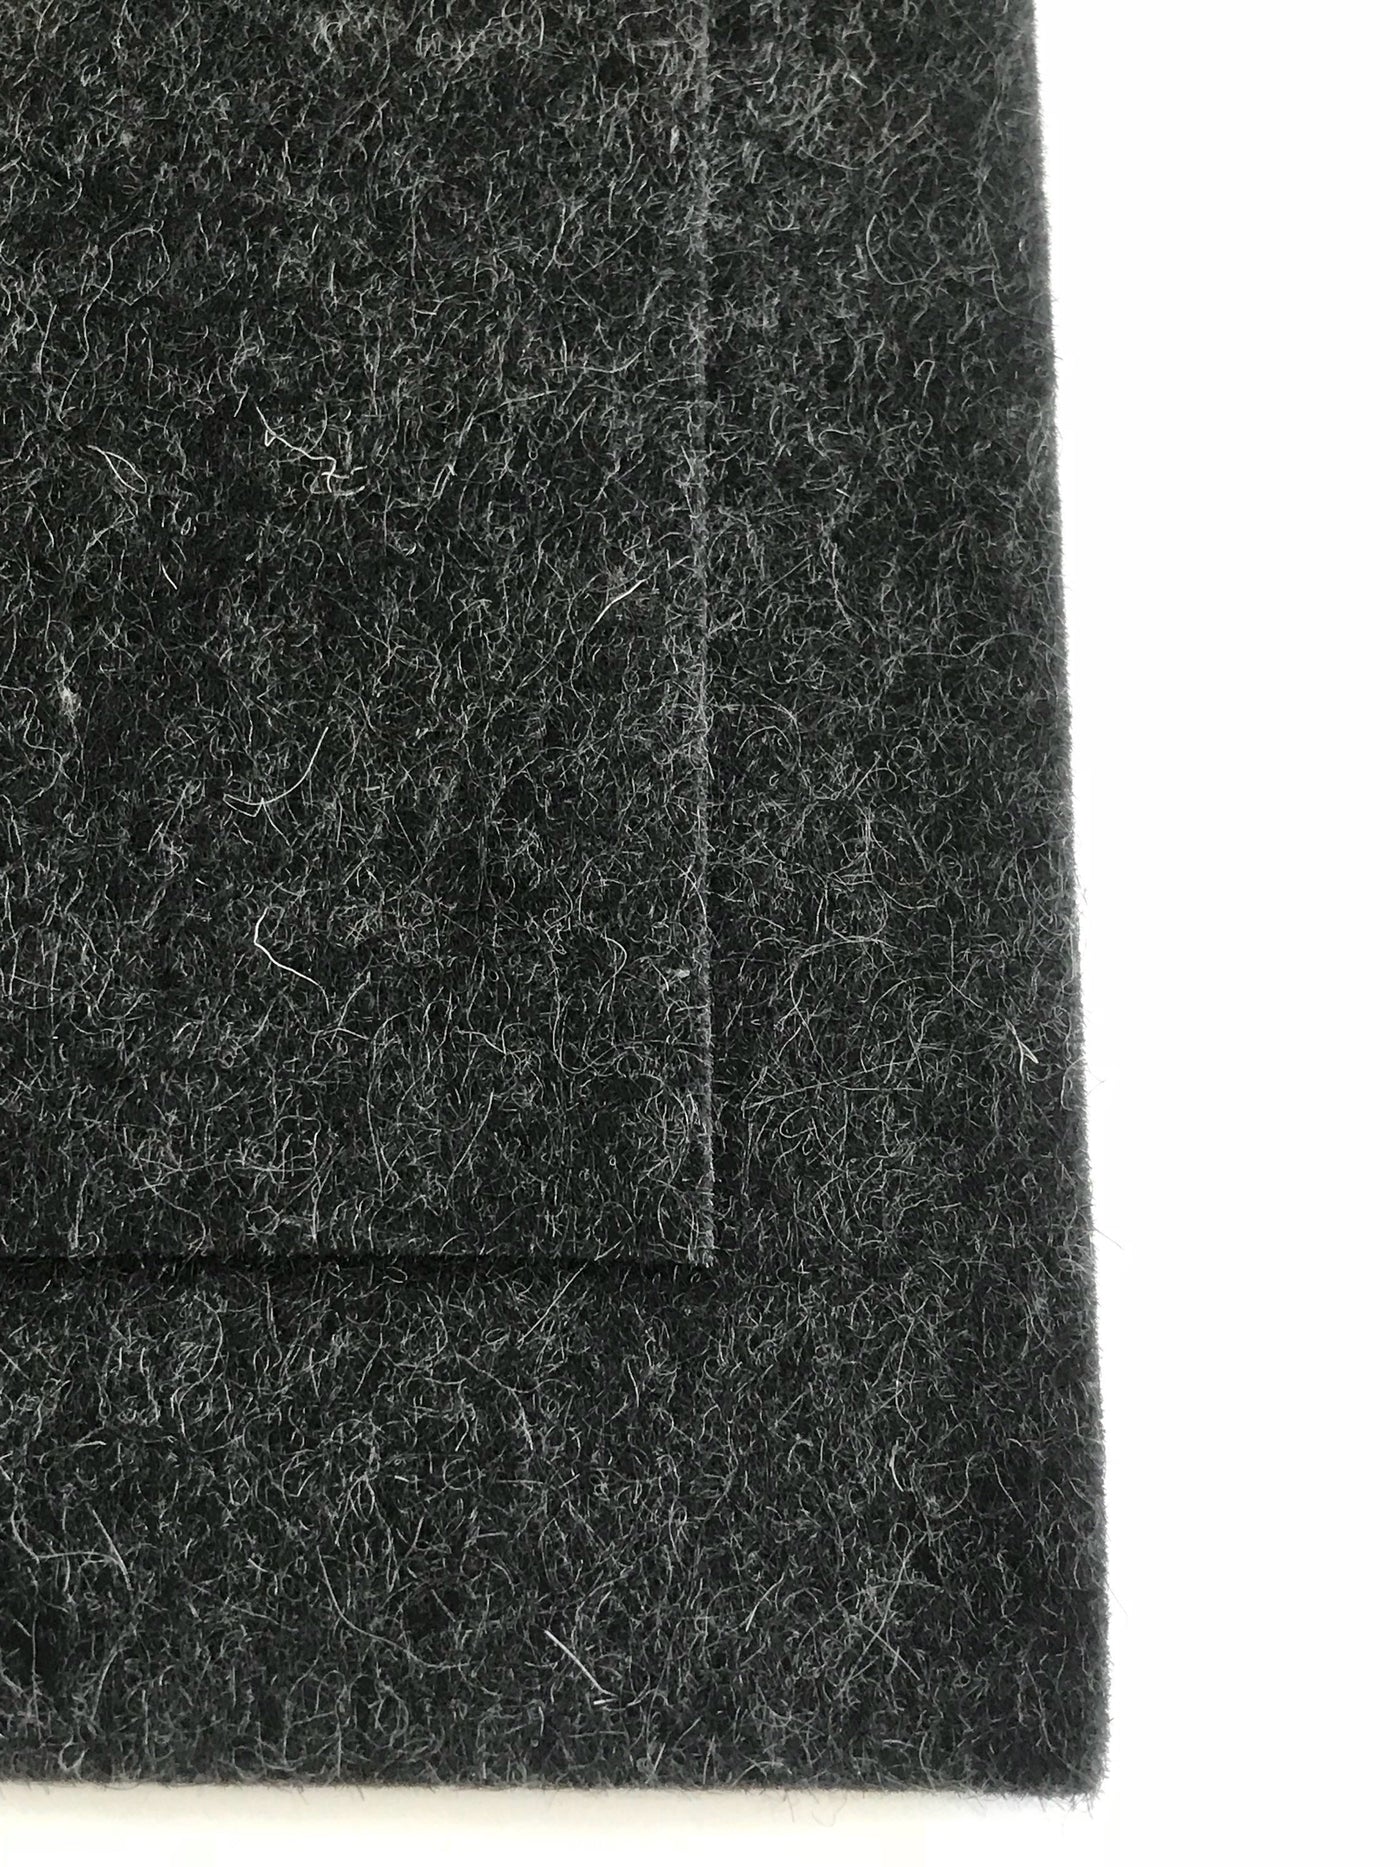 1mm Charcoal Grey Fleck Merino Wool Felt 8 x 11" Sheet - No. G-1-9